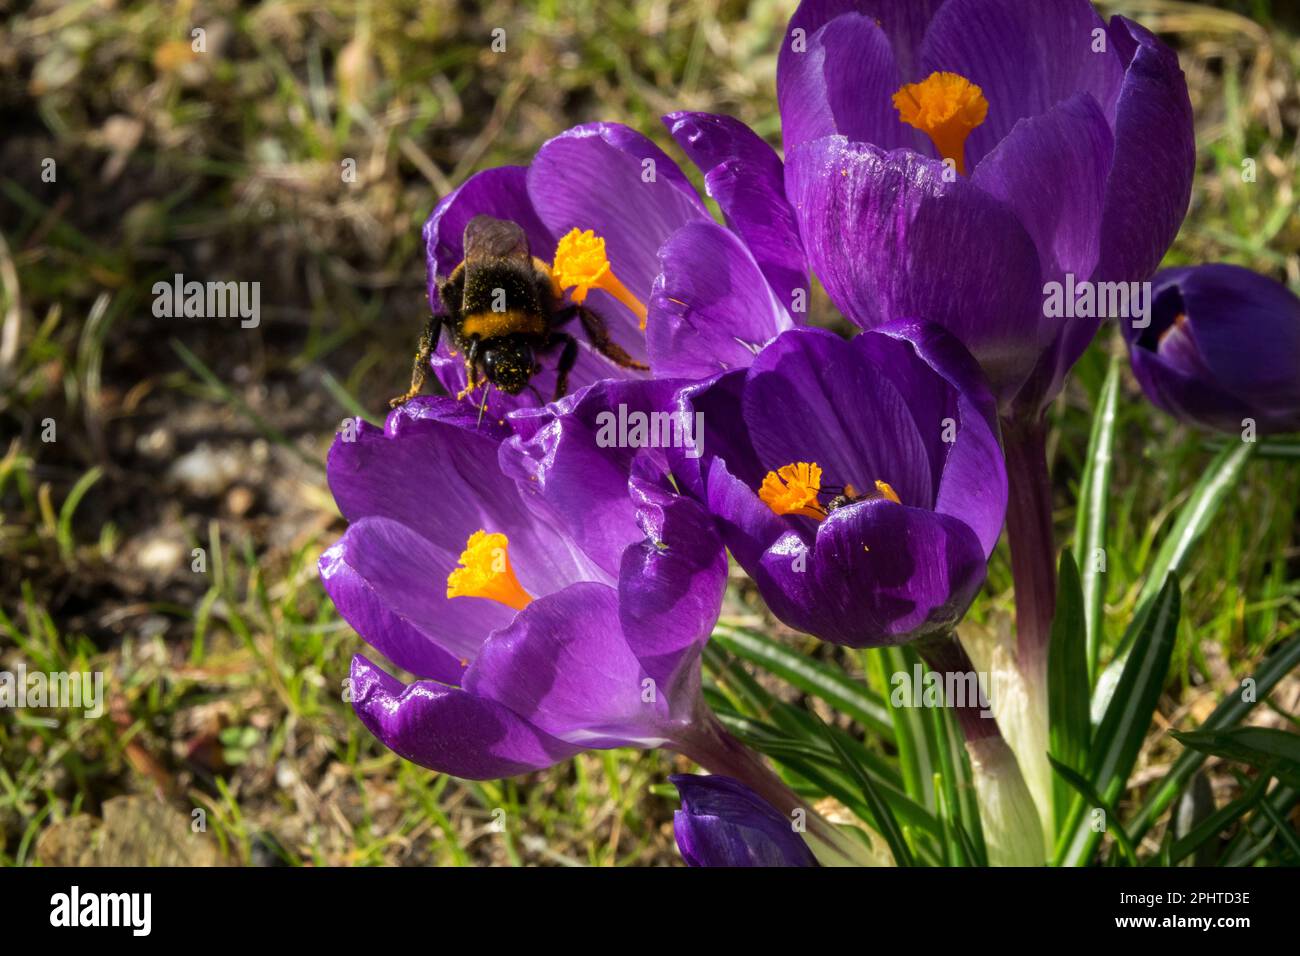 Bombus terrestris, Large earth bumblebee, Female, Heavy, Bumblebee, Insect, Crawls on Blooms, Springtime, Season Crocuses Stock Photo